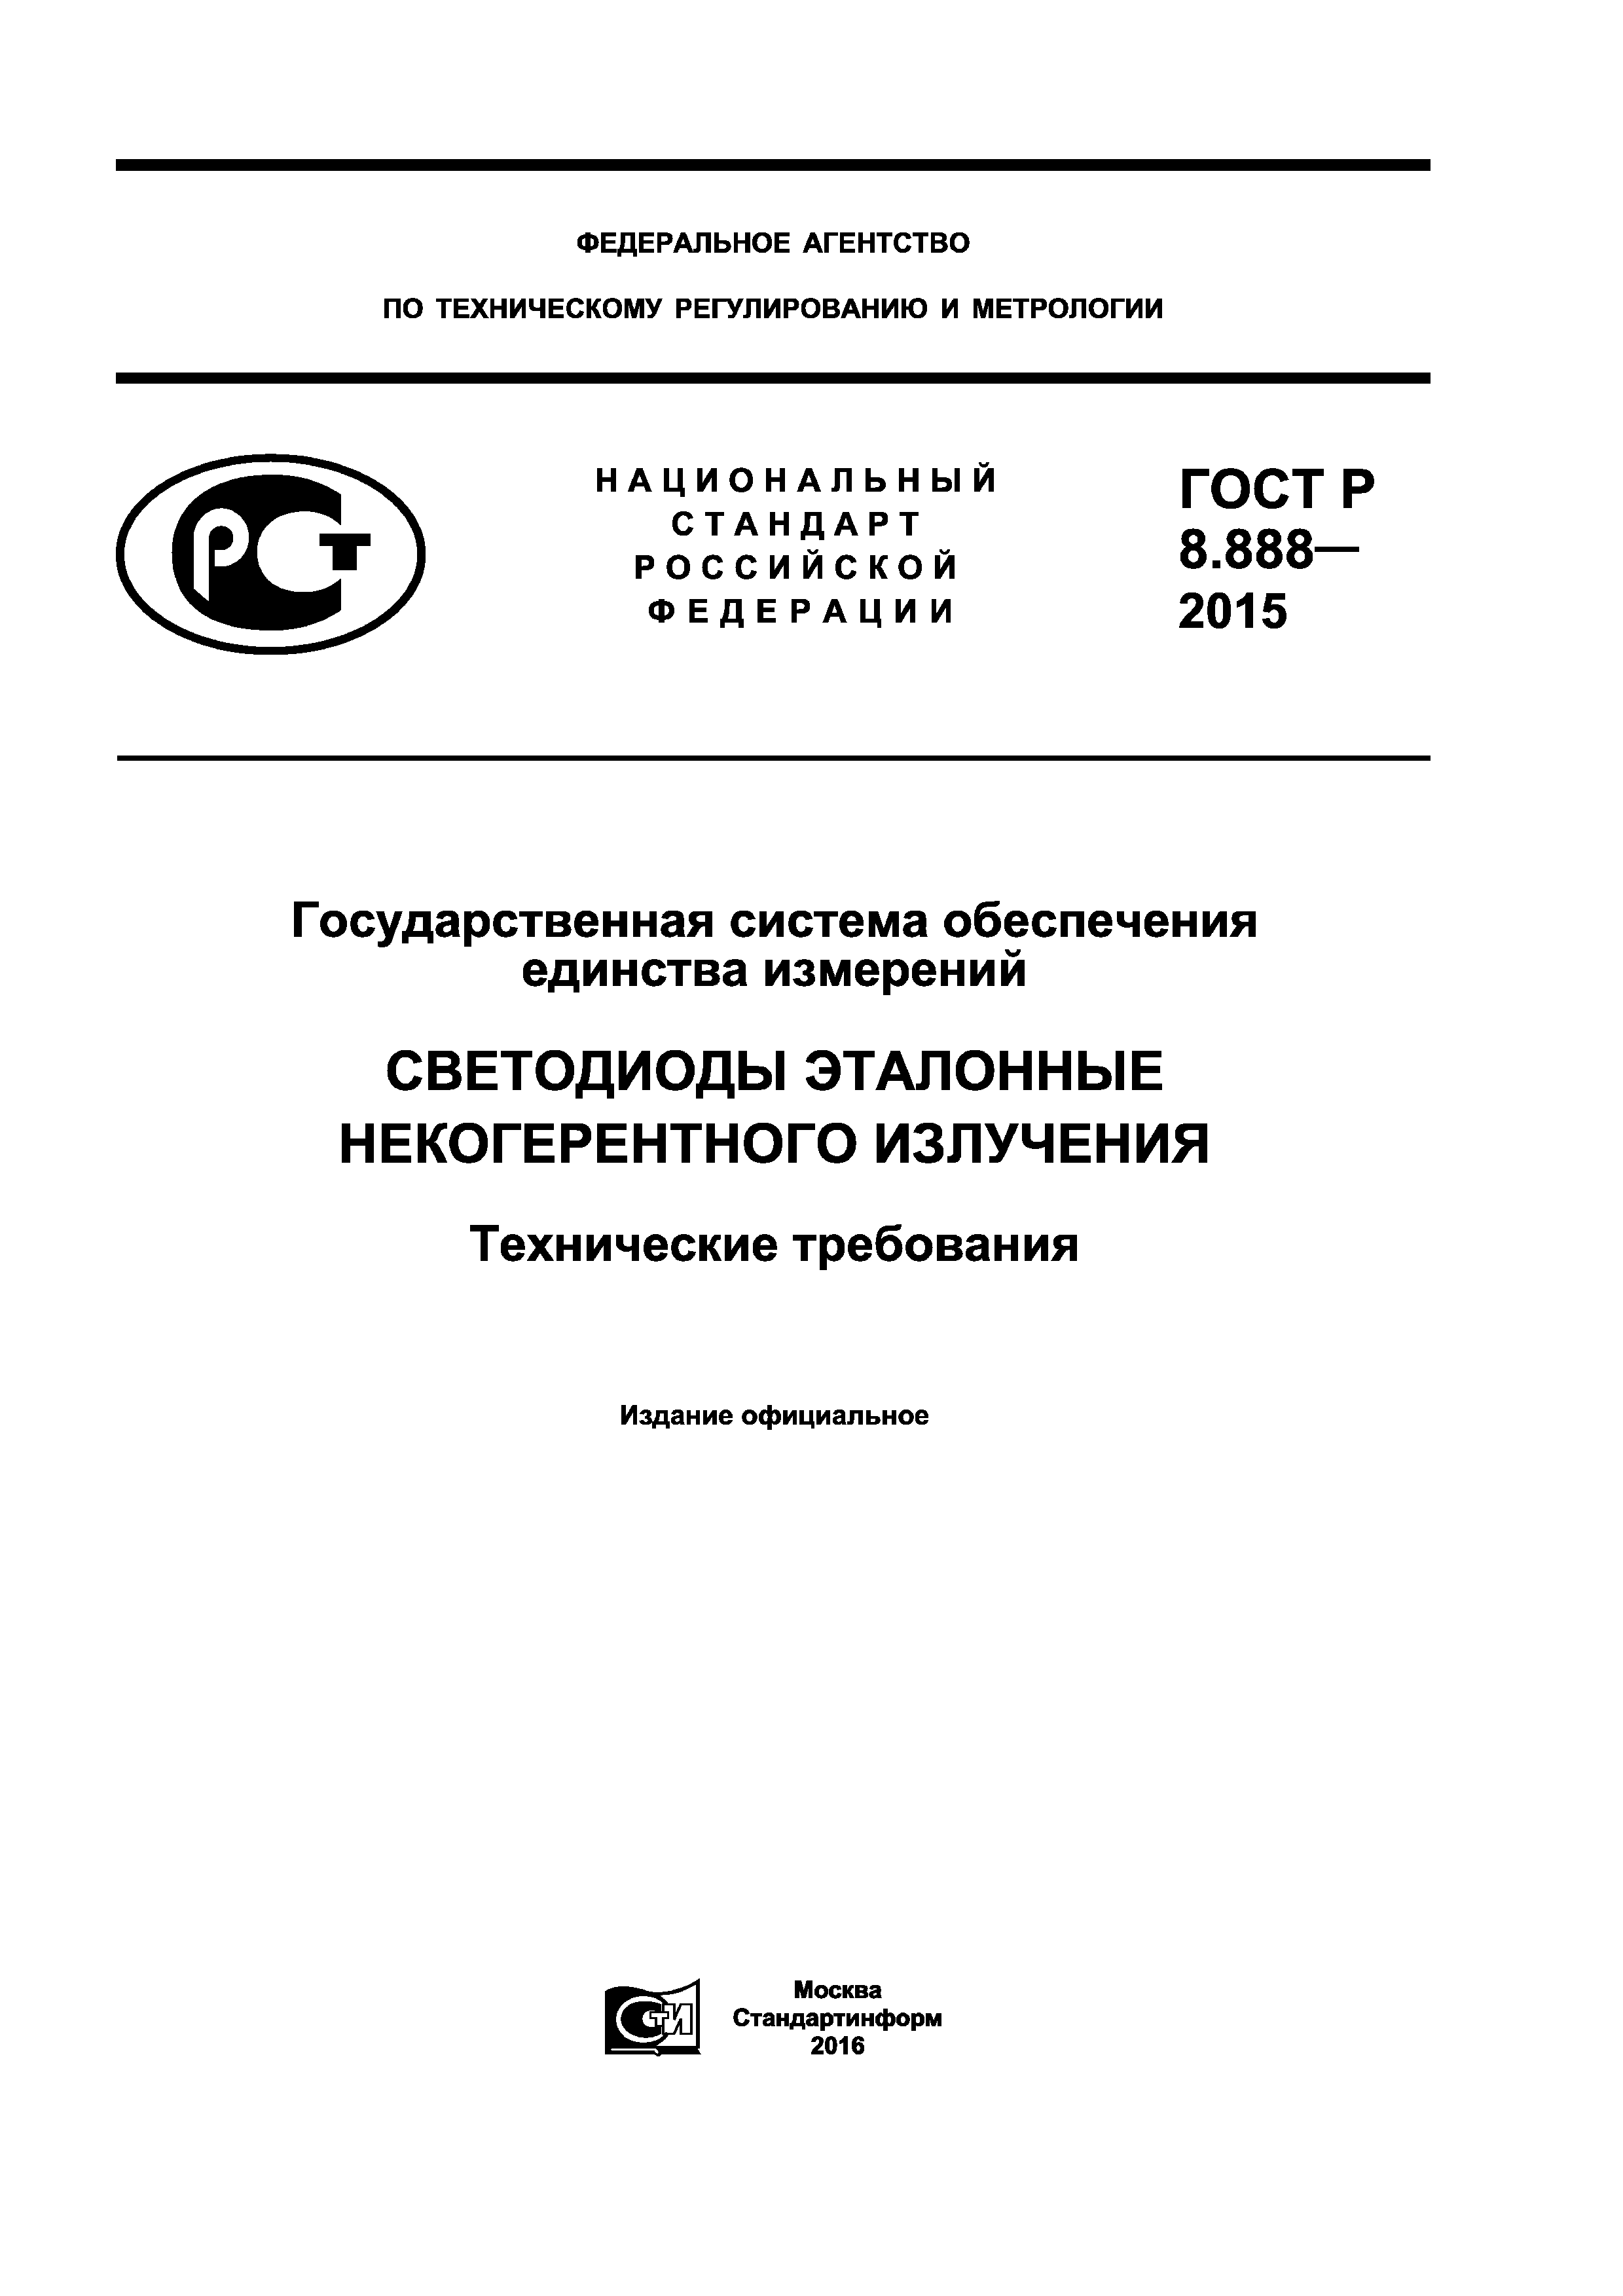 ГОСТ Р 8.888-2015